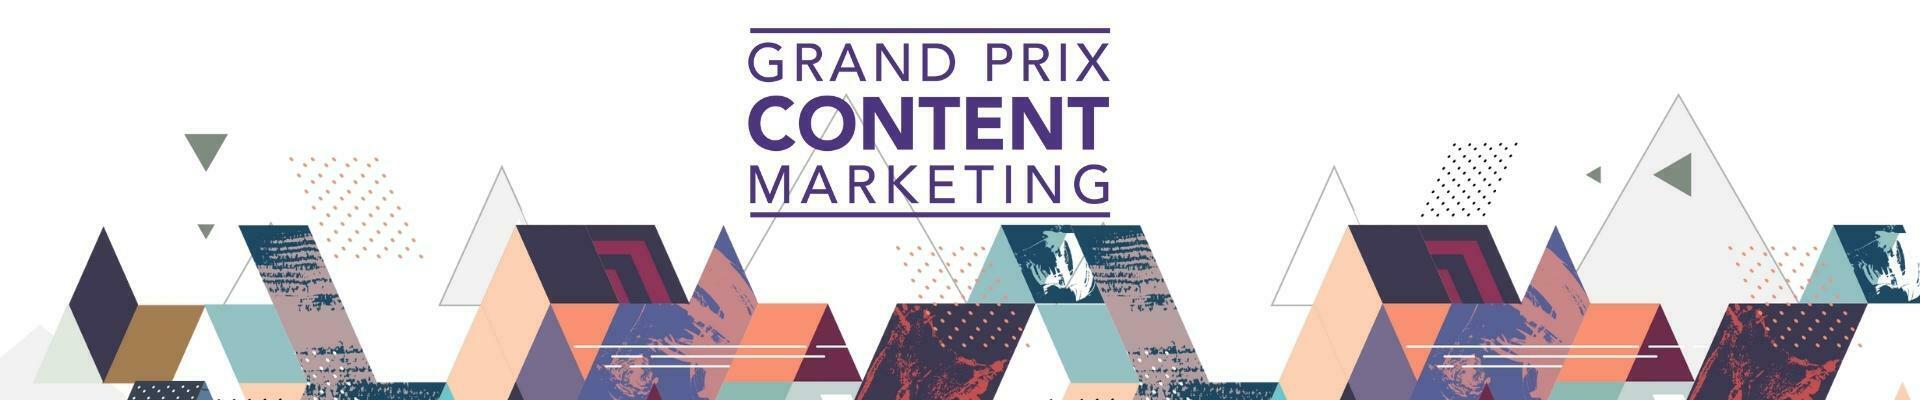 Grand Prix Content Marketing – TICKETS AVOND